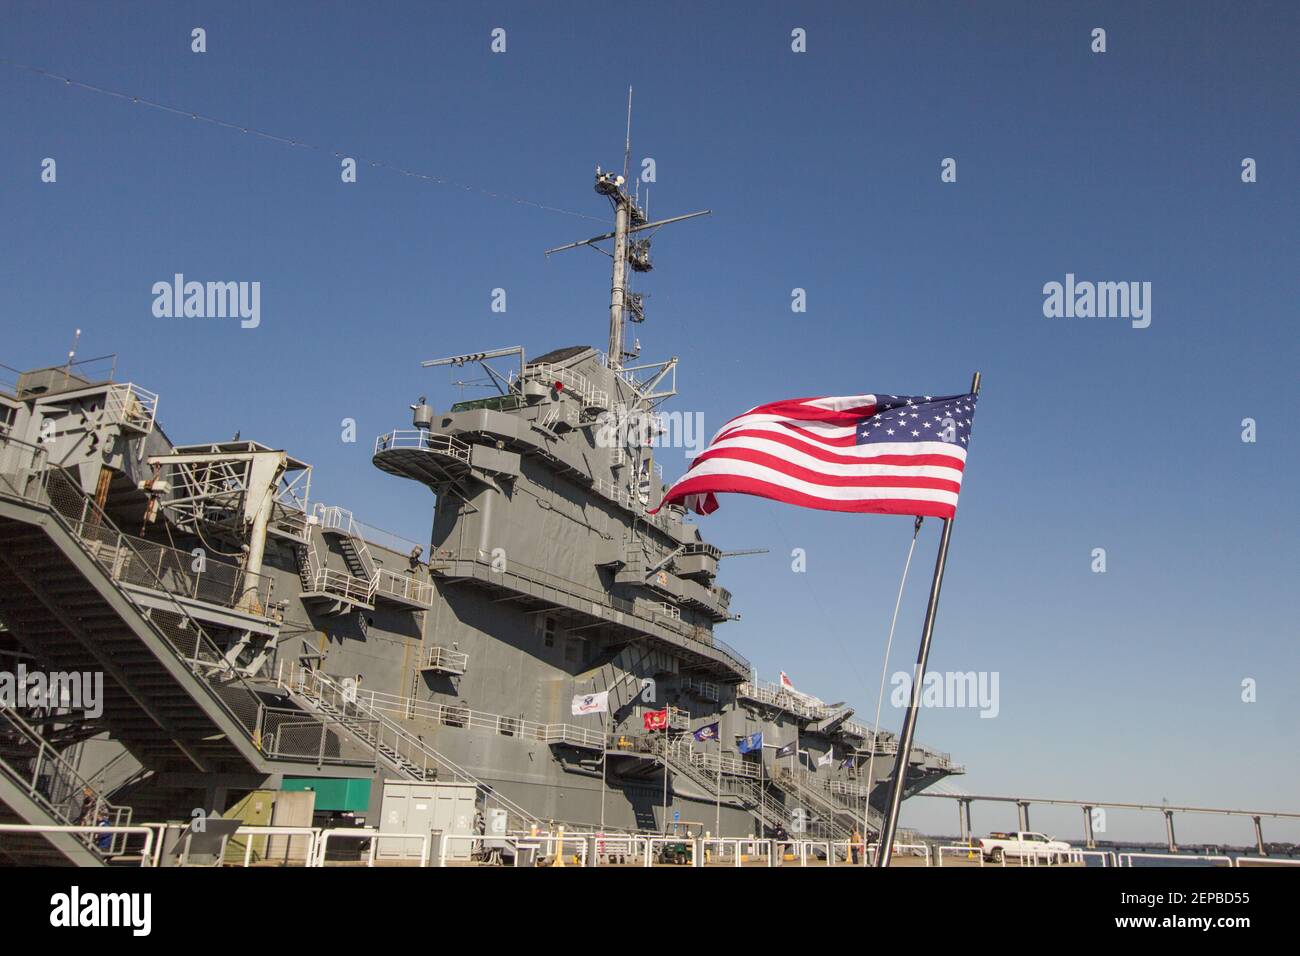 Mount Pleasant, South Carolina, USA - 21. Februar 2021 - der Flugzeugträger USS Yorktown ist heute als Museum und Denkmal am Patriots Point tätig. Stockfoto